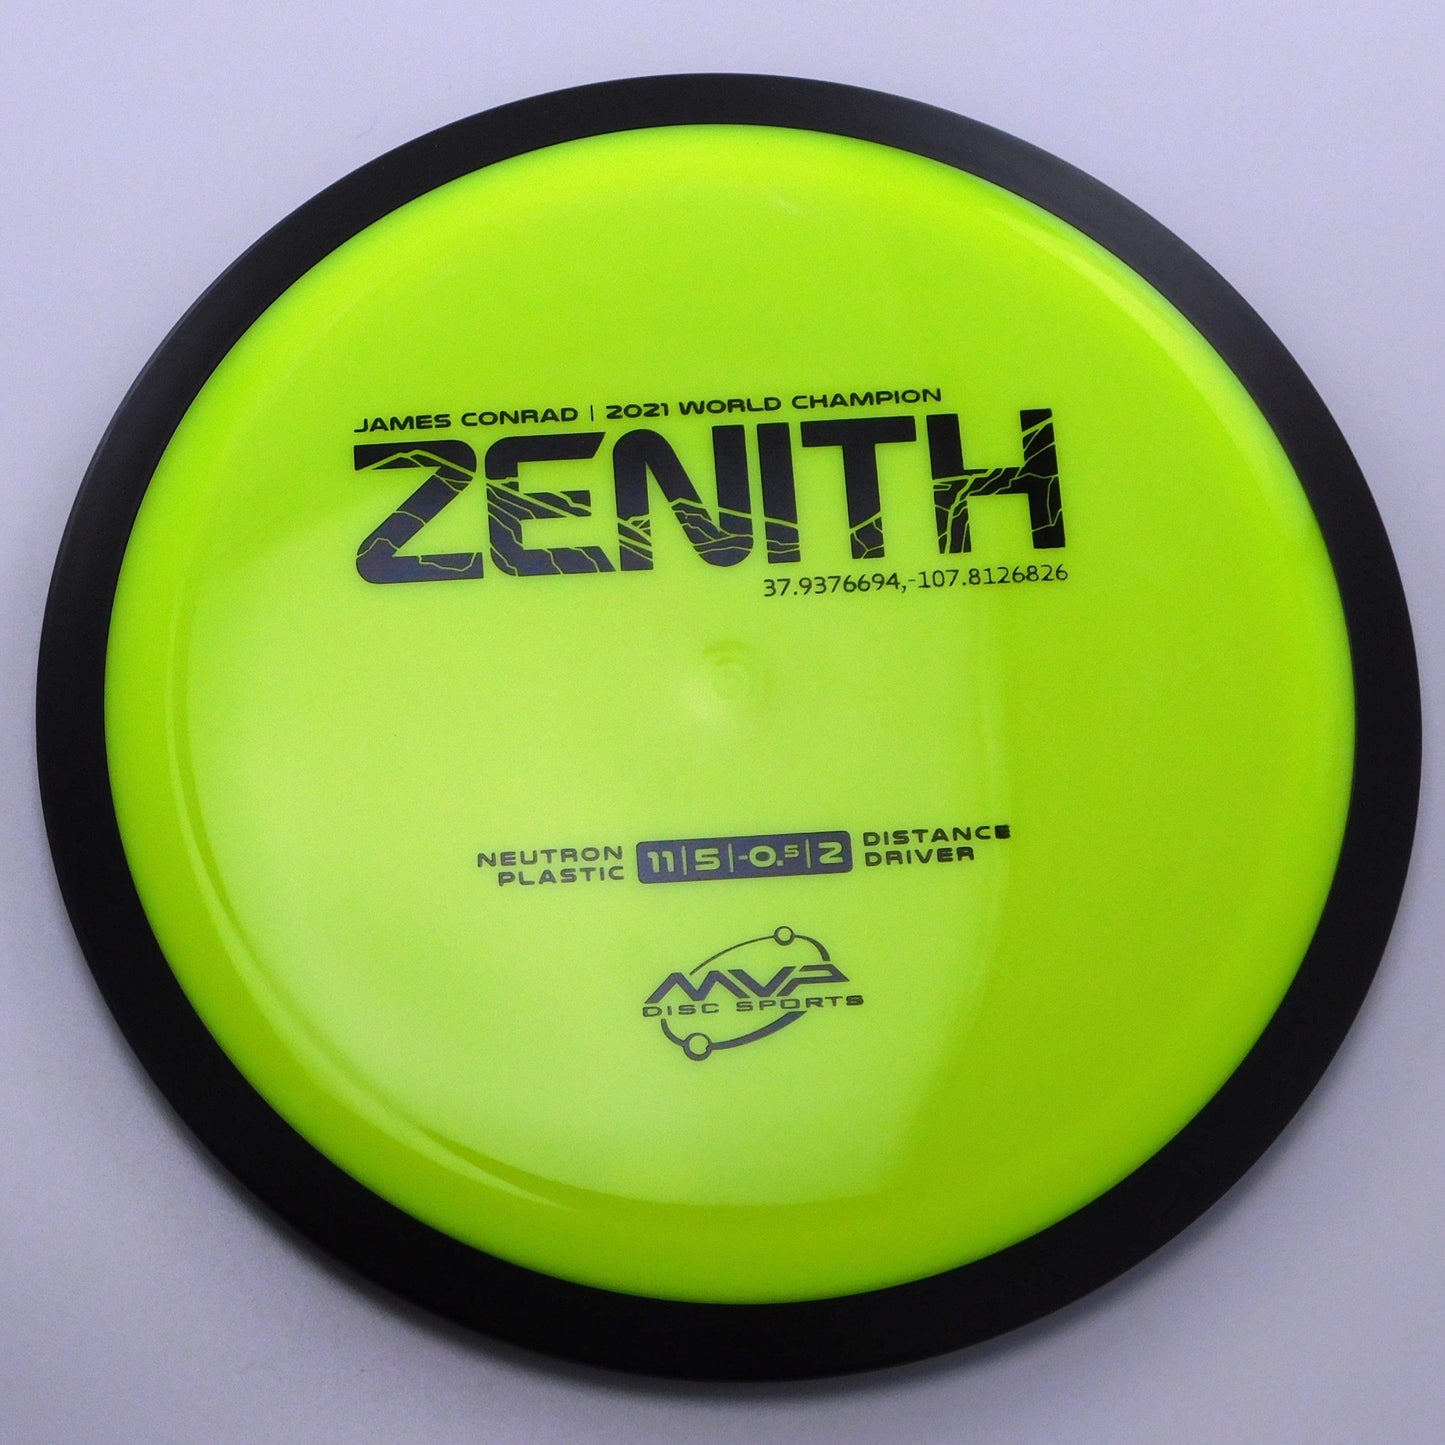 MVP Zenith - James Conrad - Neutron 11│5│-0.5│2 171.3g - Yellow - MVP Zenith - Neutron - 100468